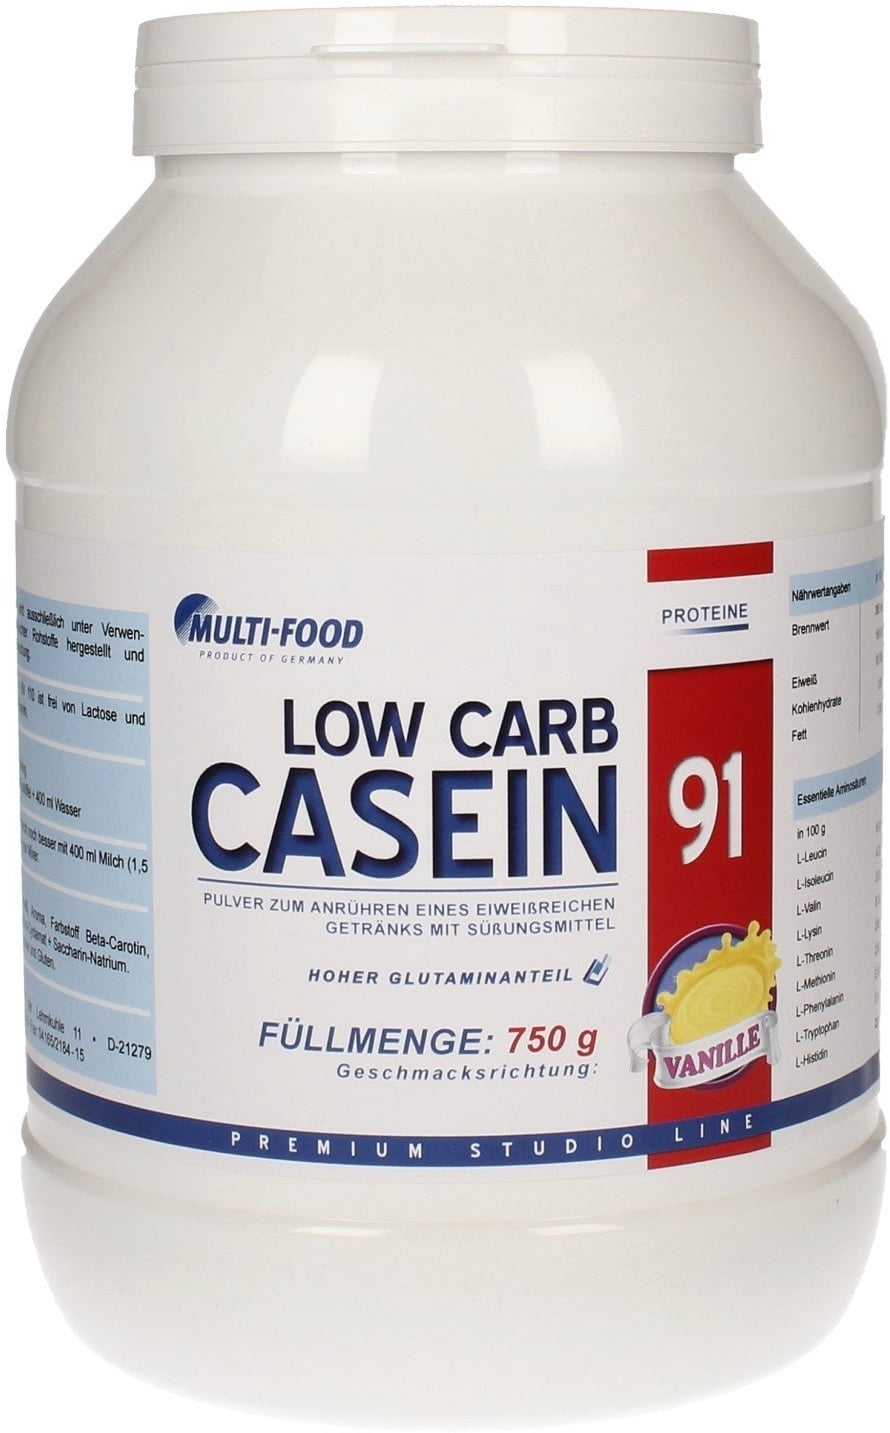 Multi-Food LOW CARB CASEIN 91, 750g Dose - Vanille